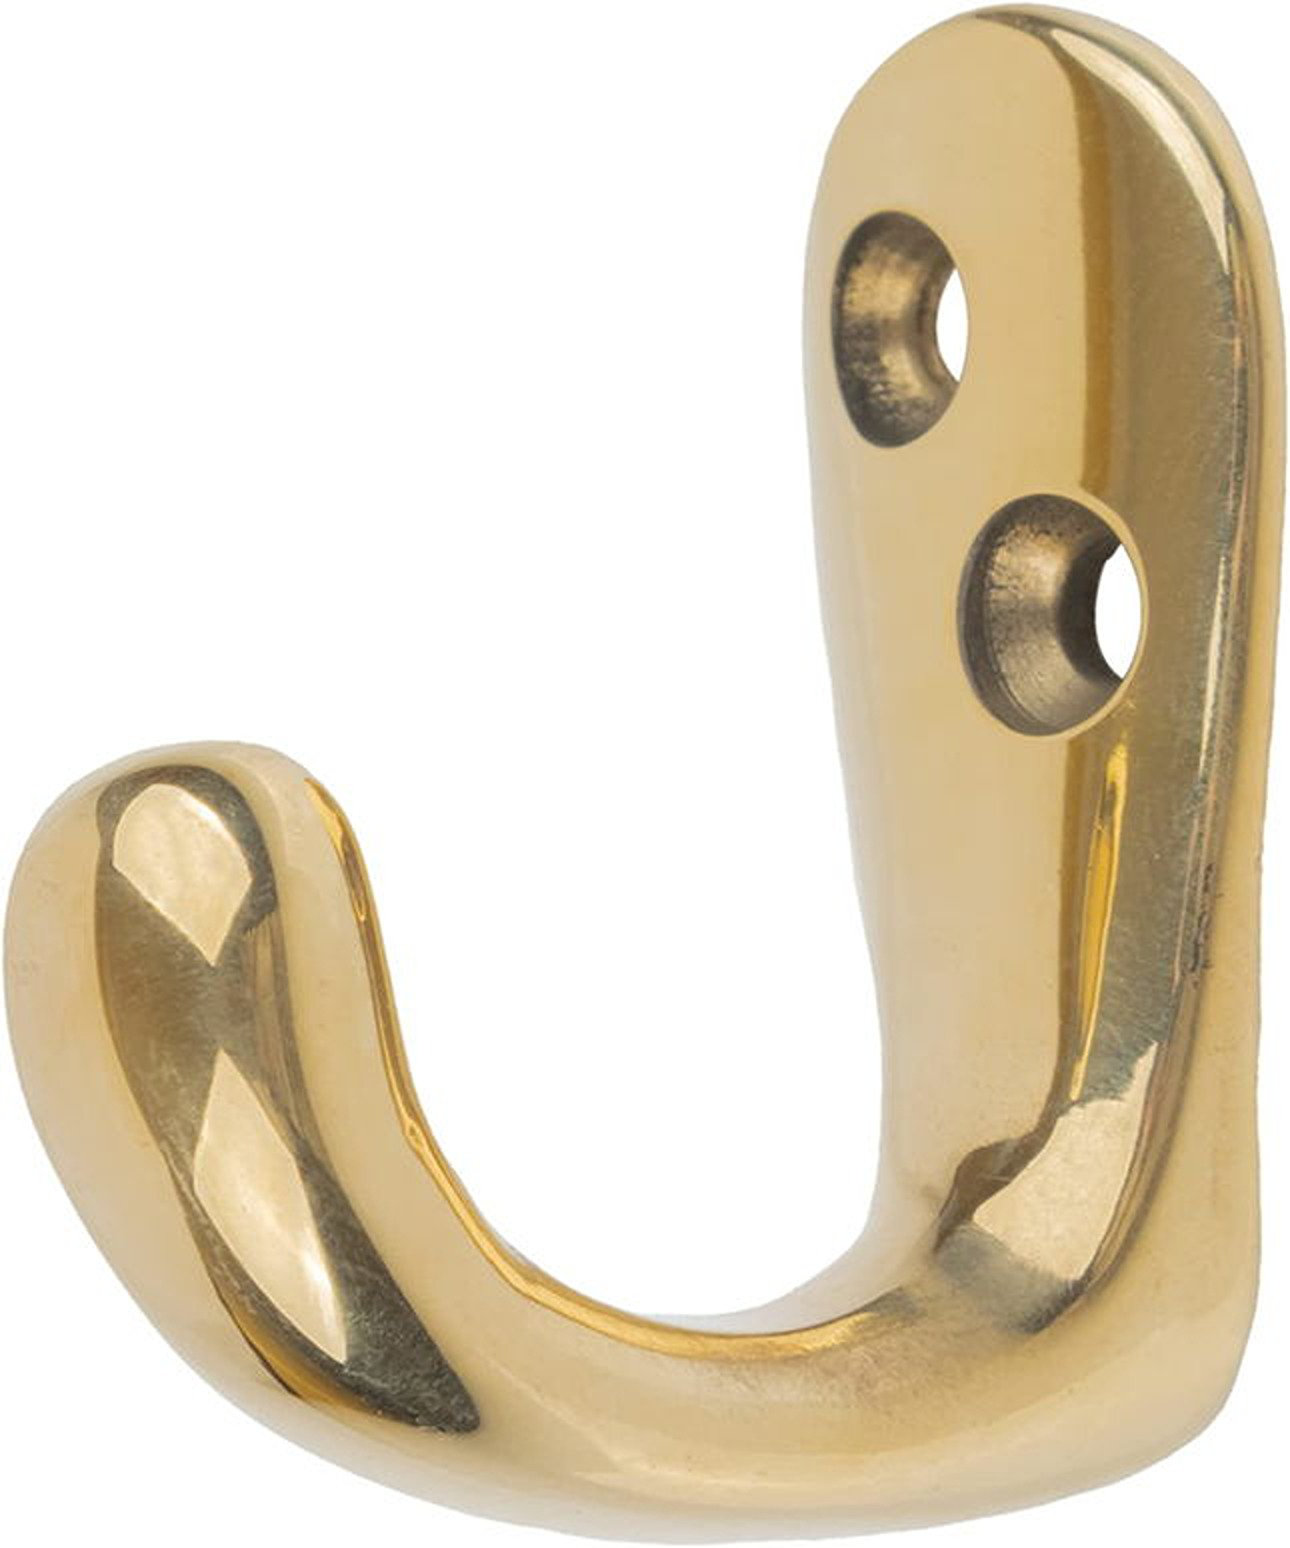 Large Double Hook - Polished Brass Brass Coat Hooks